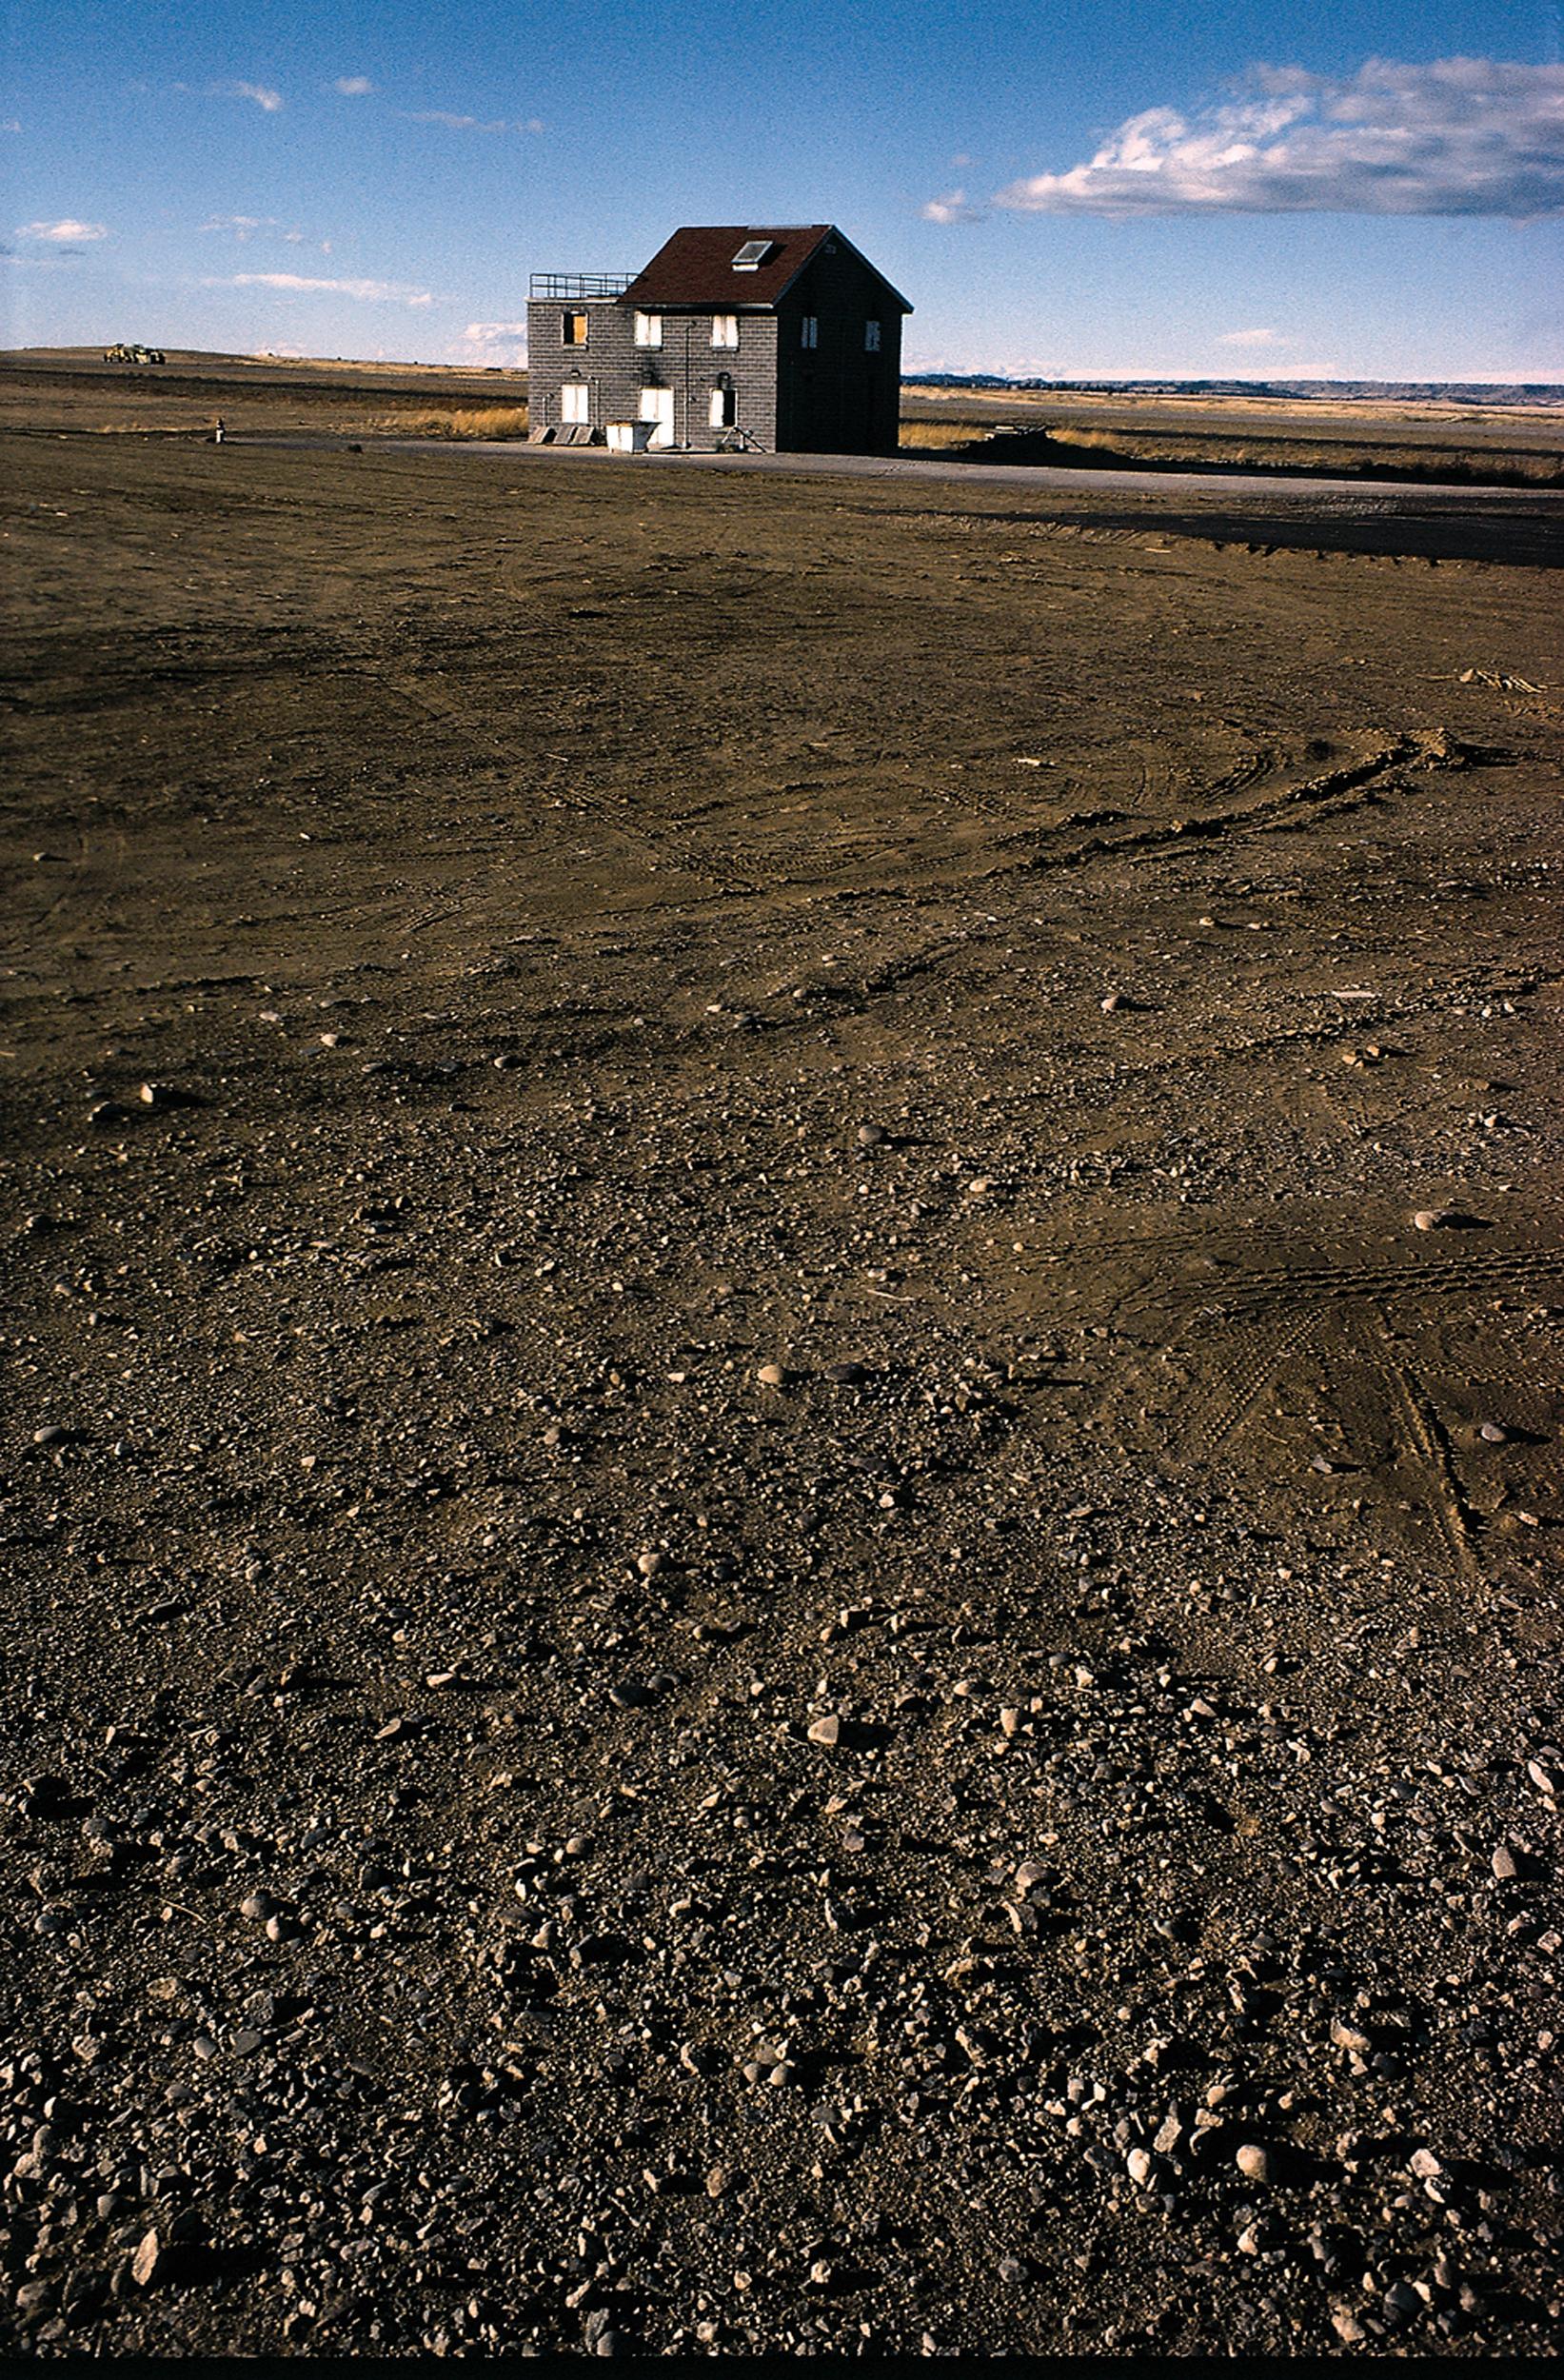 Michael K. Yamaoka  Color Photograph - American Contemporary Photo by M. K. Yamaoka - Lone House, Billings Montana